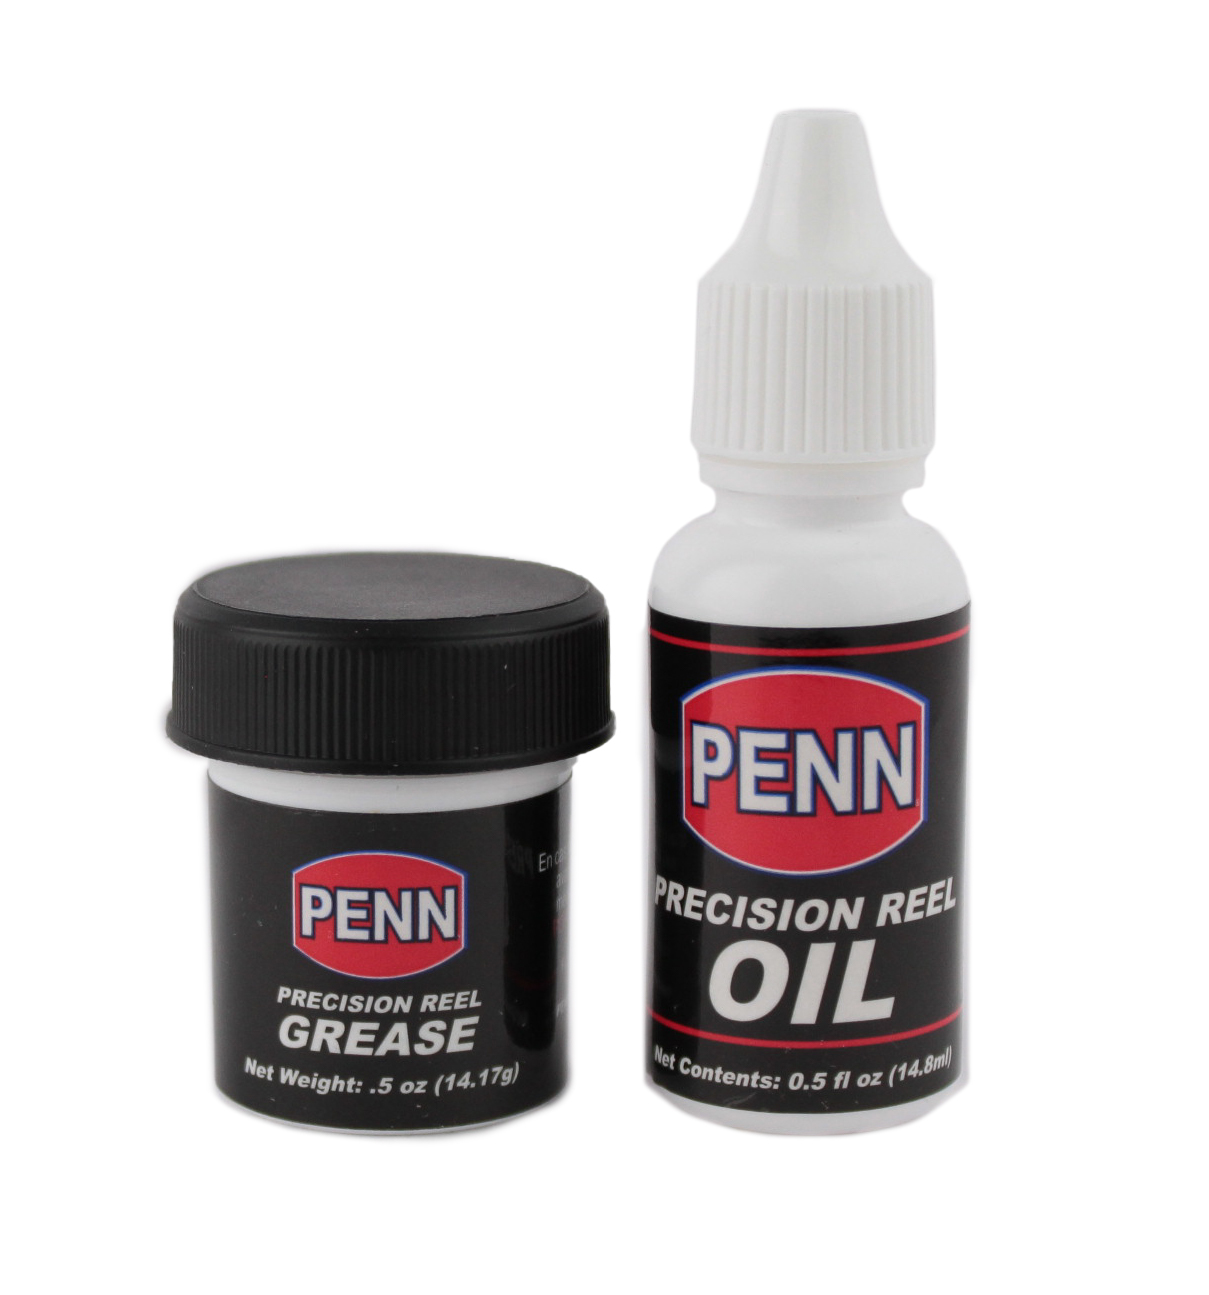 Смазка Penn Pack oil&grease купить в интернет-магазине Huntworld.ru